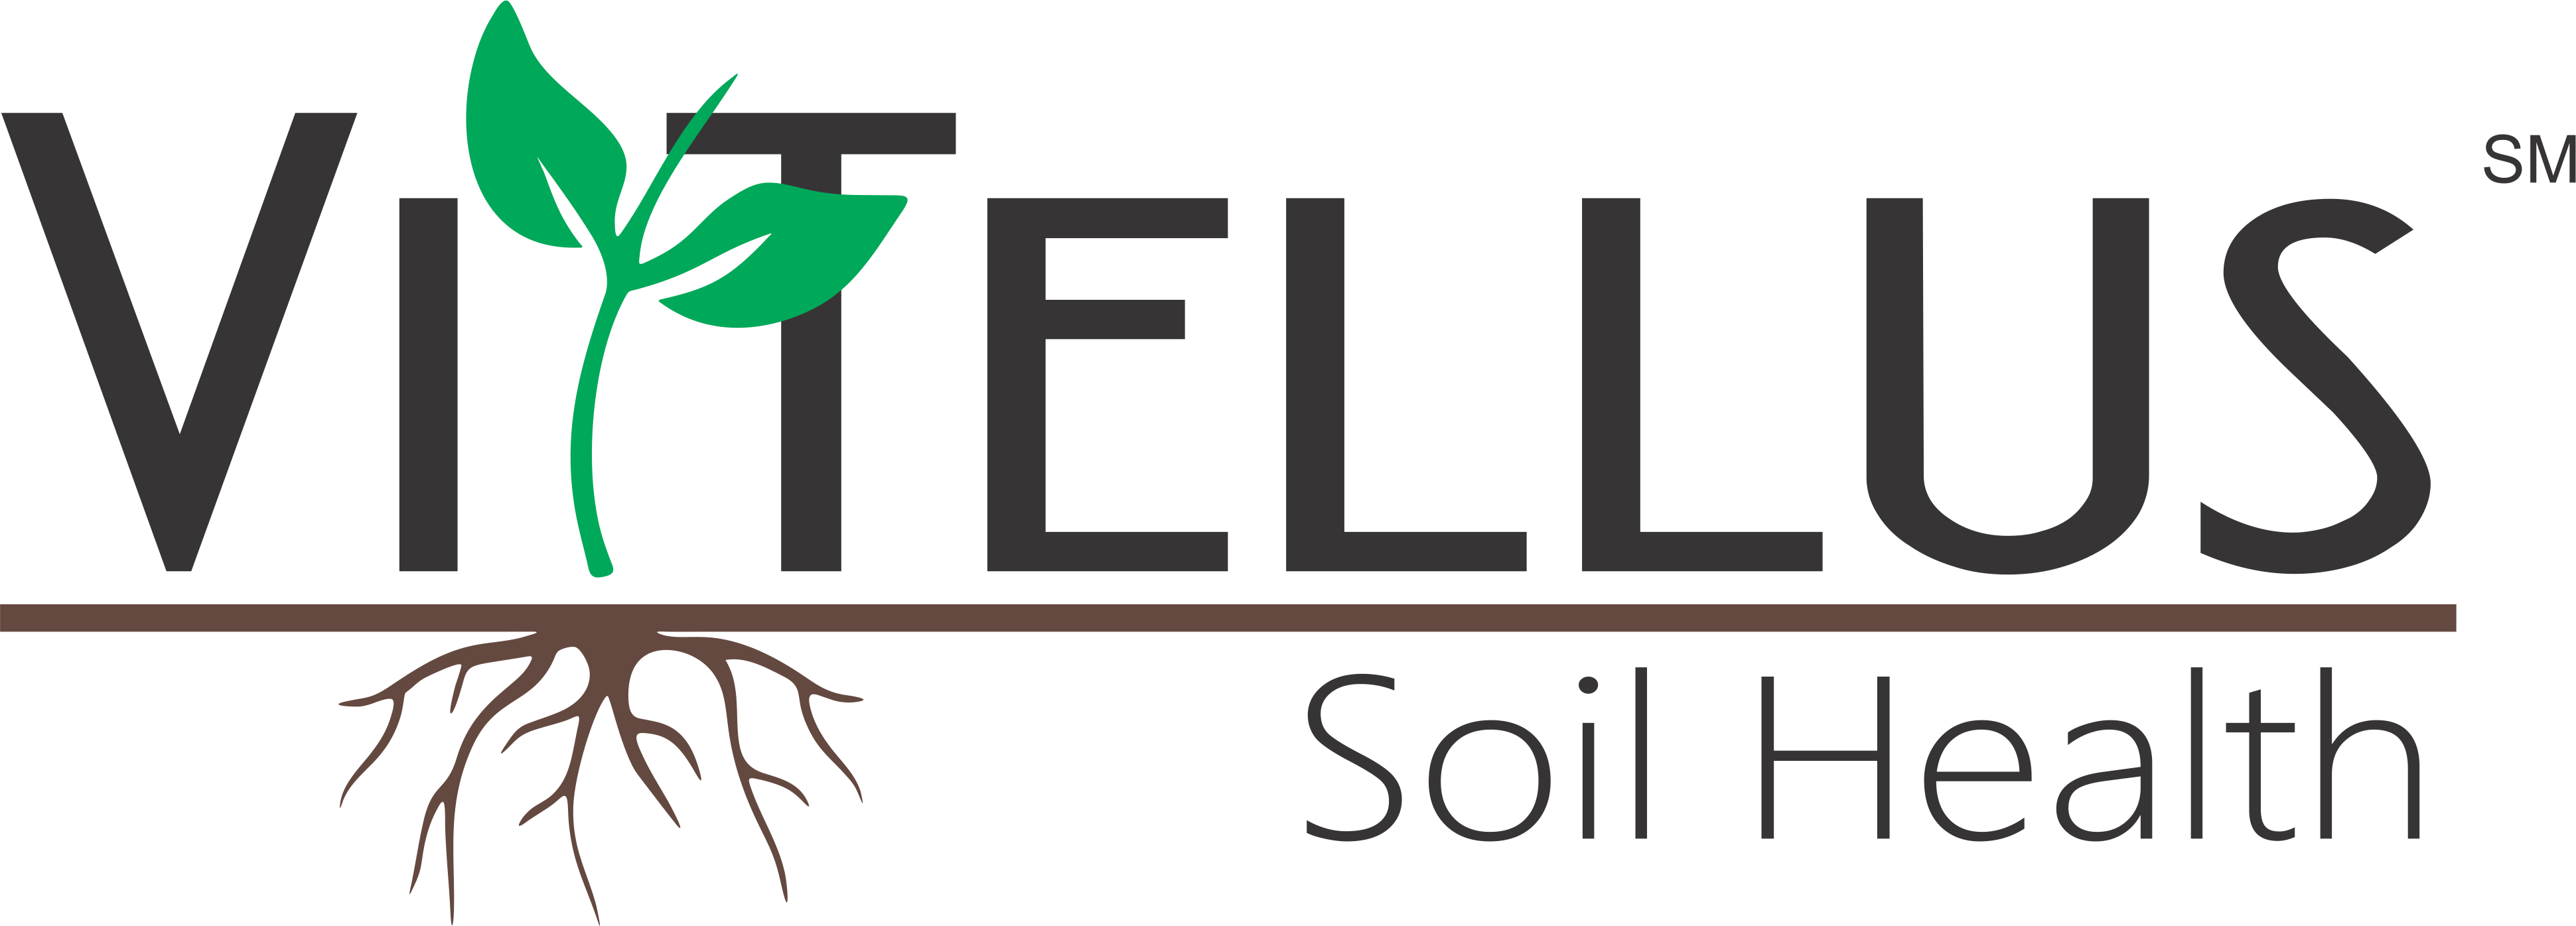 VitTellus logo